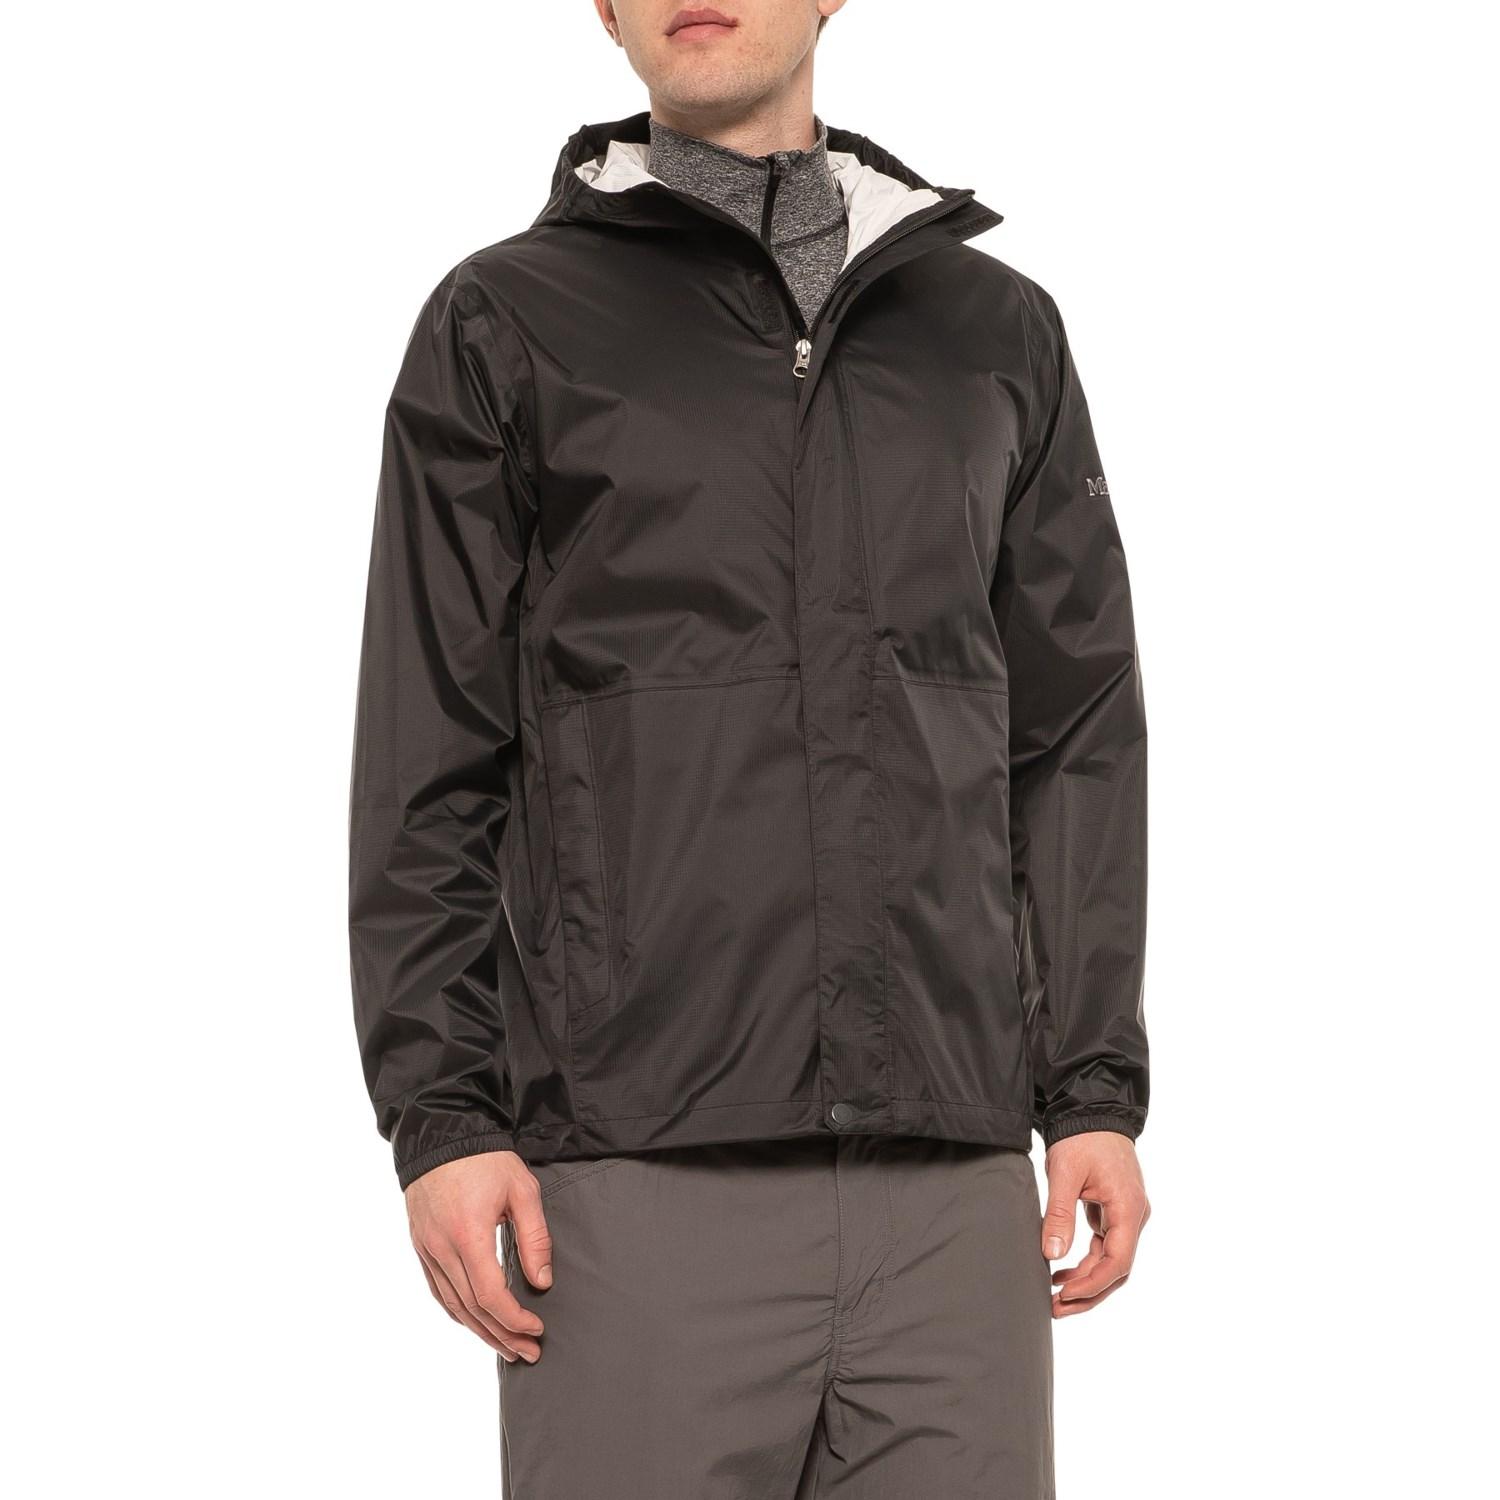 Marmot Synthetic Camp Rain Jacket in Black for Men - Lyst